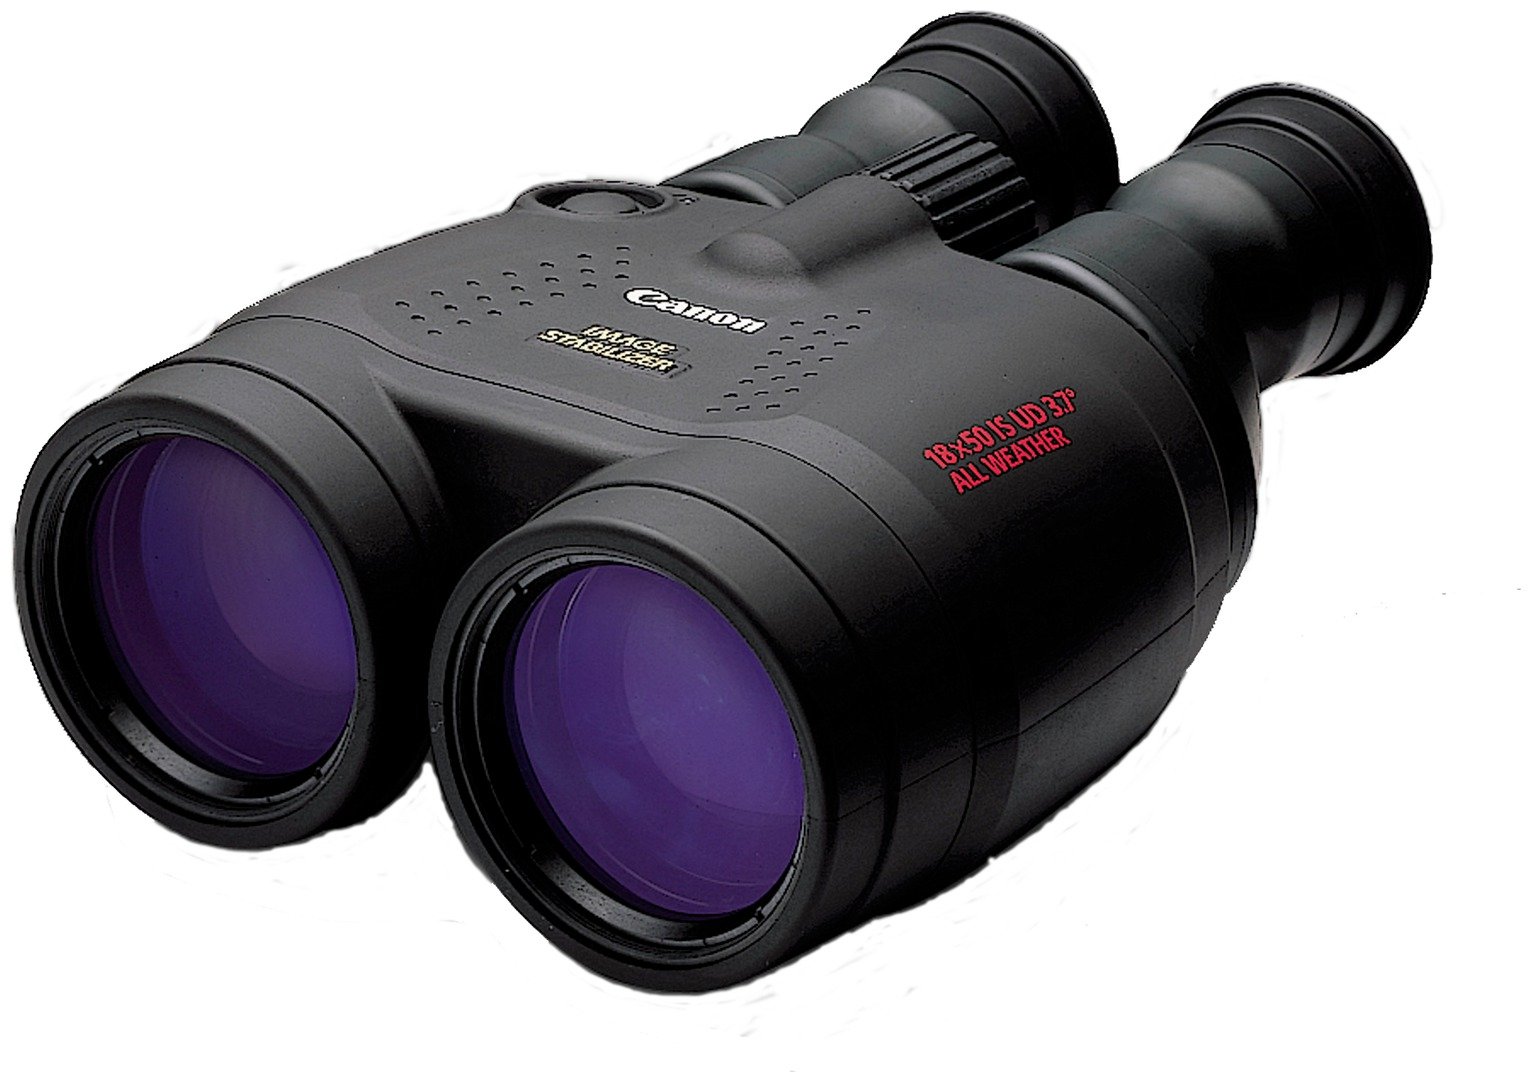 Canon 18 x 50 IS Binoculars Review